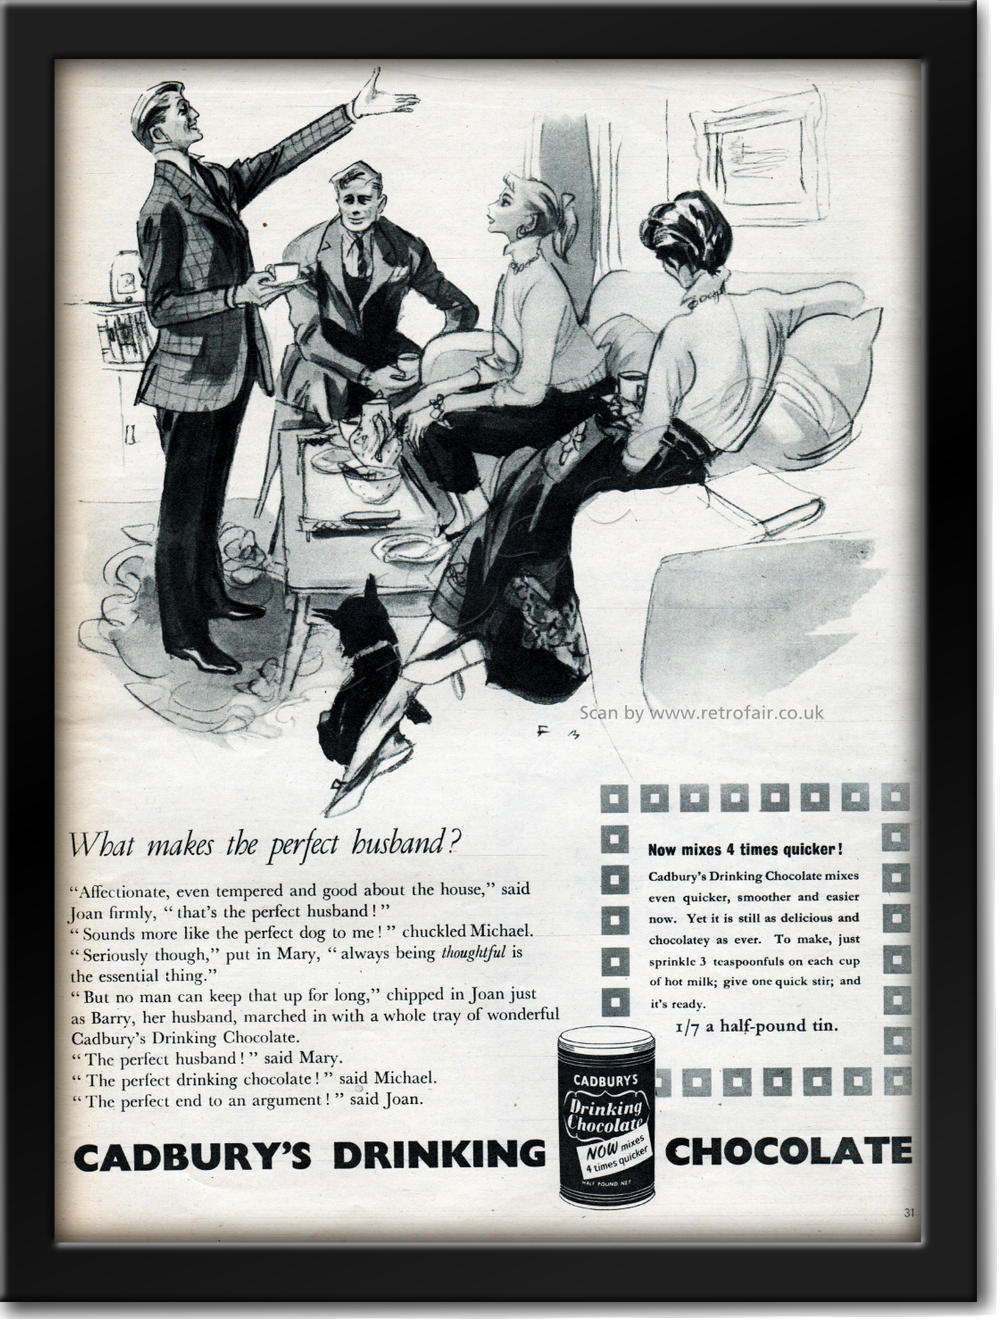 1954 vintage Cadbury's Drinking Chocolate advert